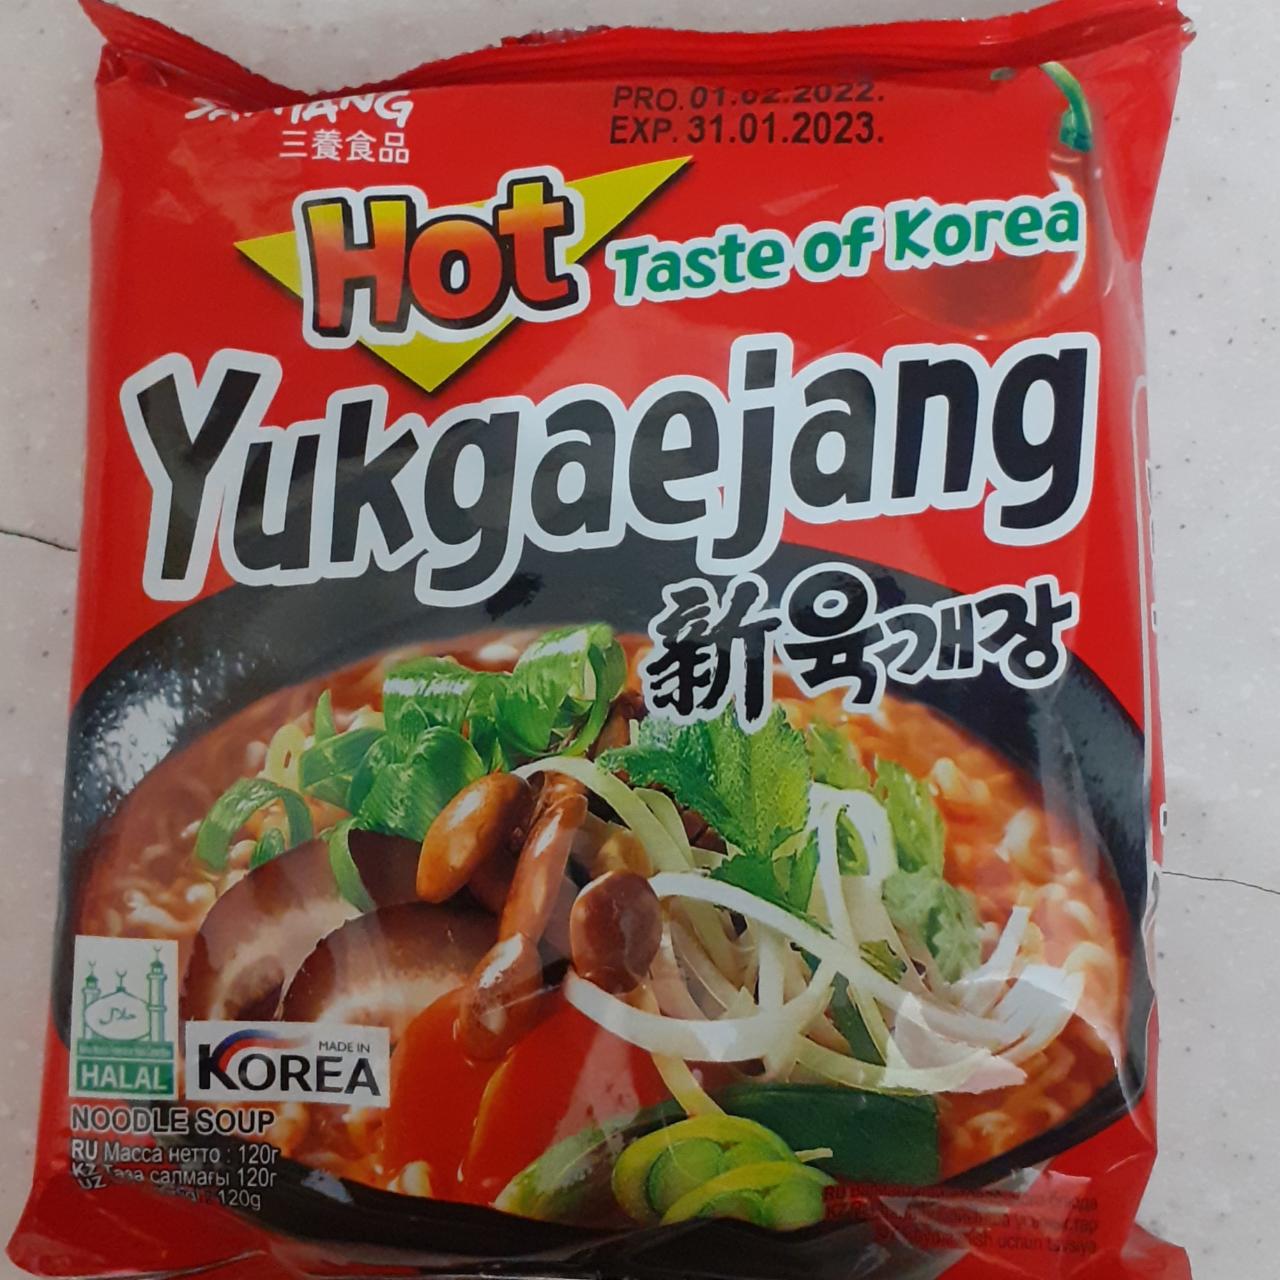 Фото - hot taste of Korea Yukgaejang Samyang